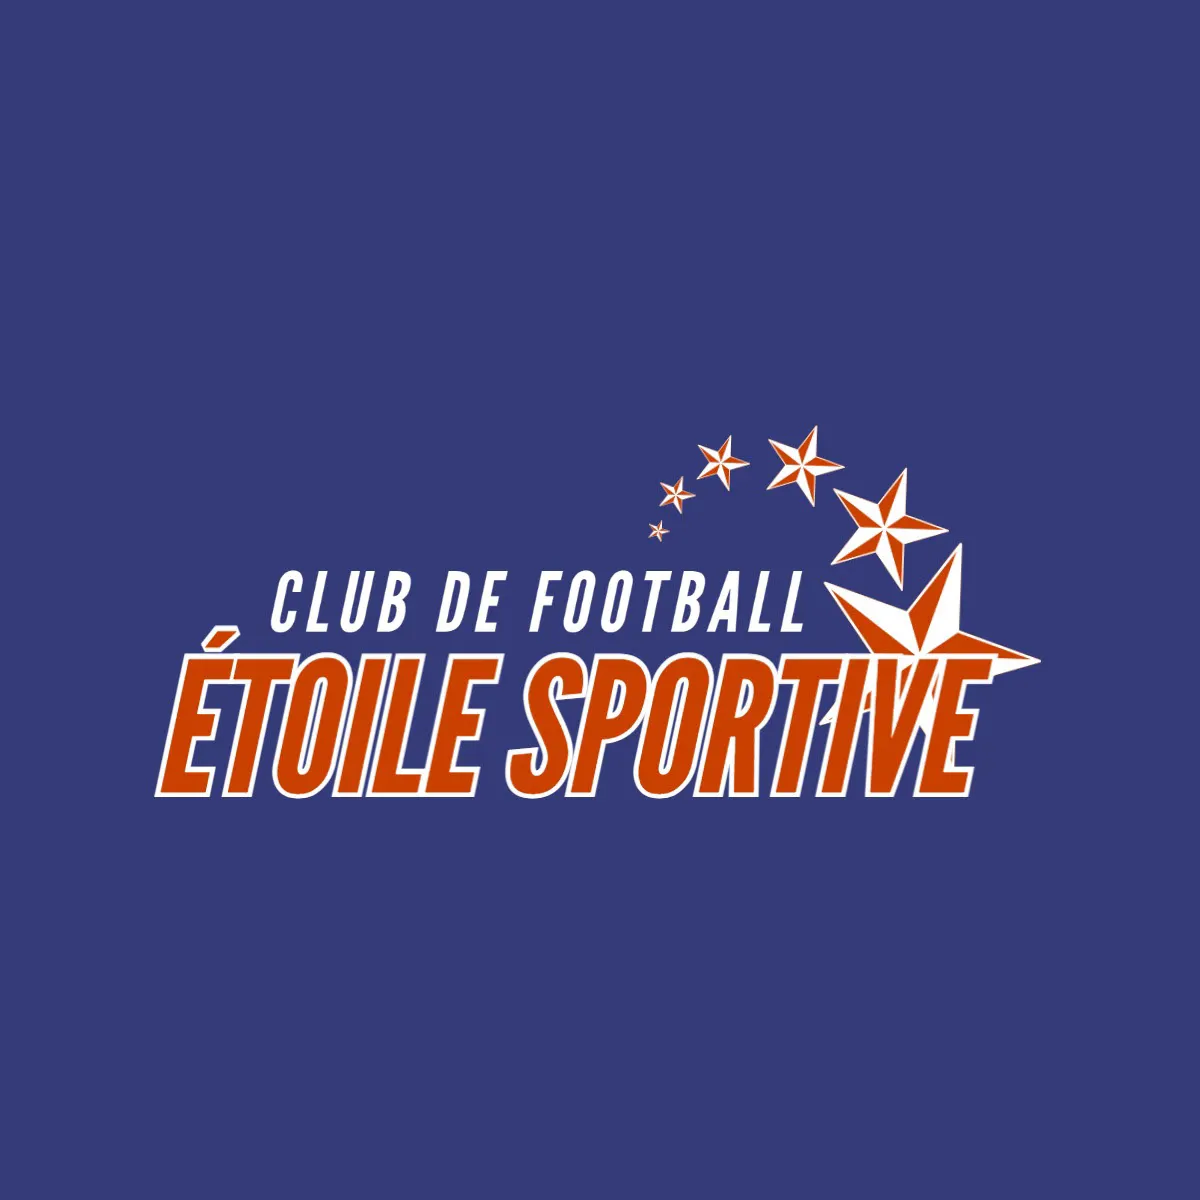 Blue And White Stars Football Club Logo